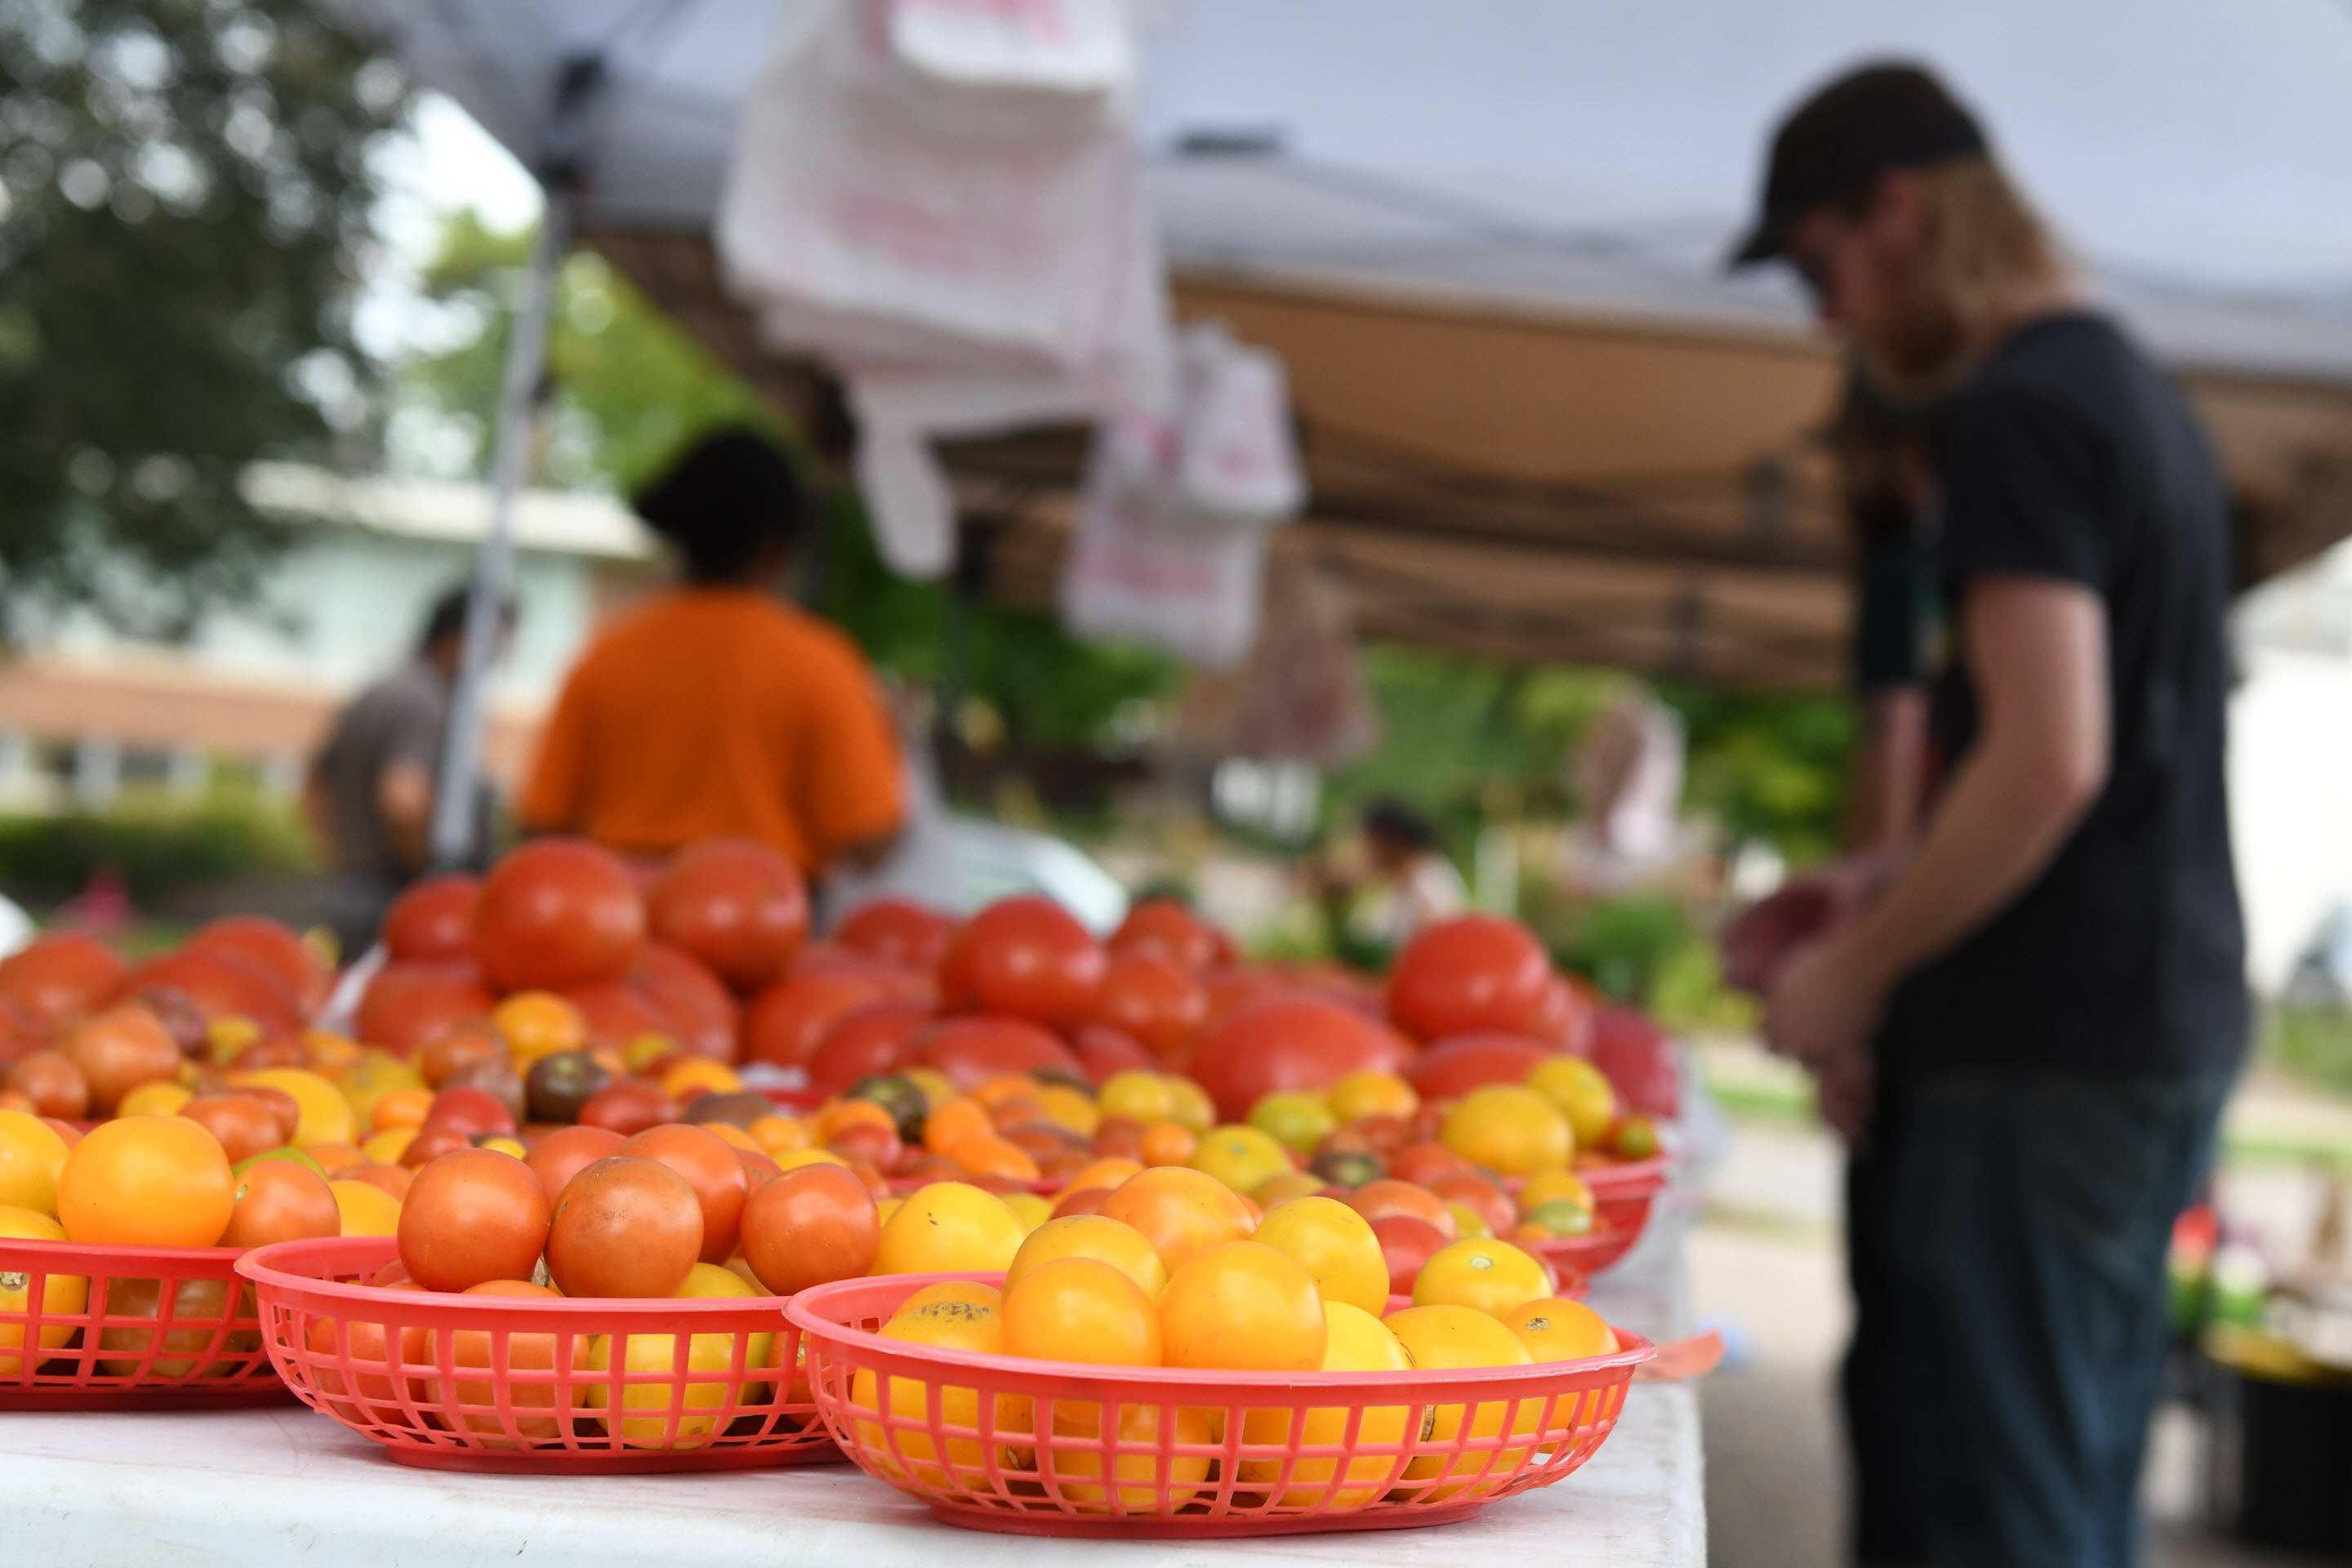 Farmers market tomatoes